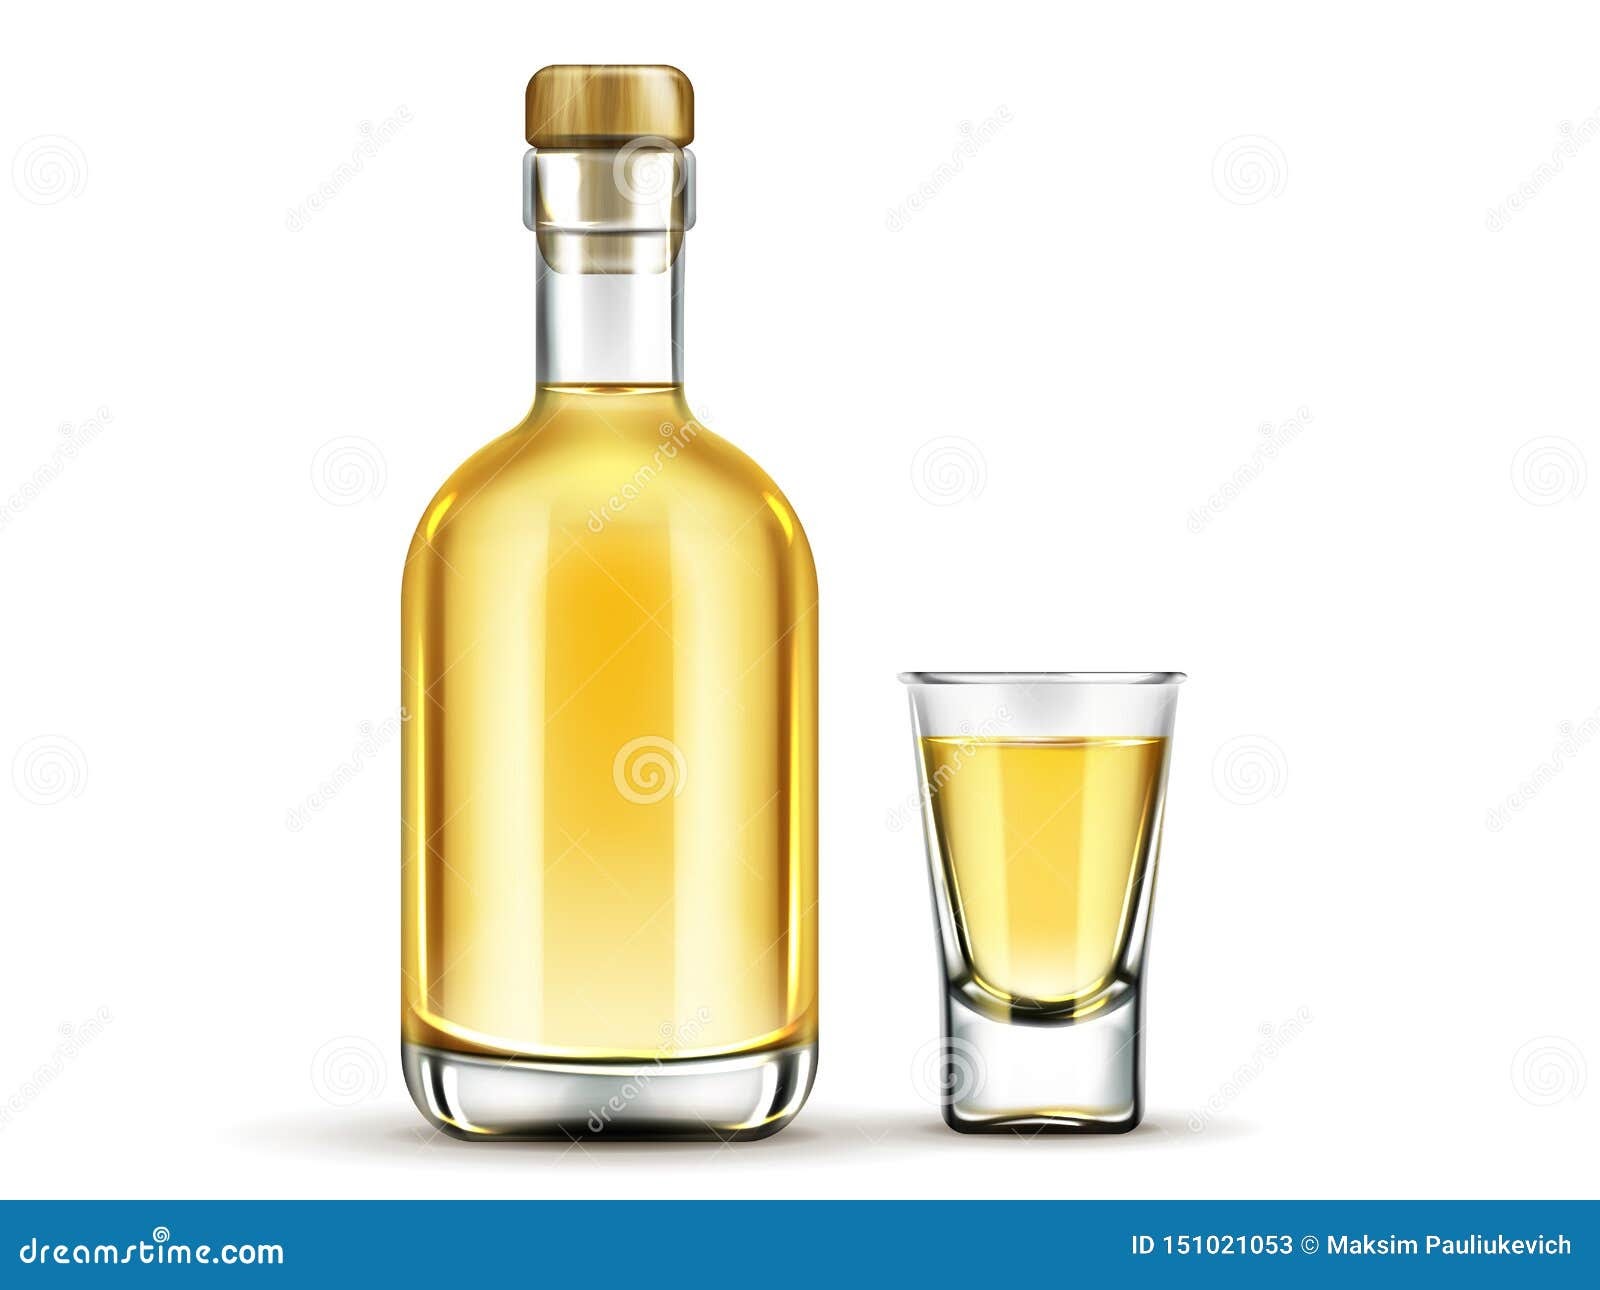 Download Golden Tequila Bottle With Cork Mockup